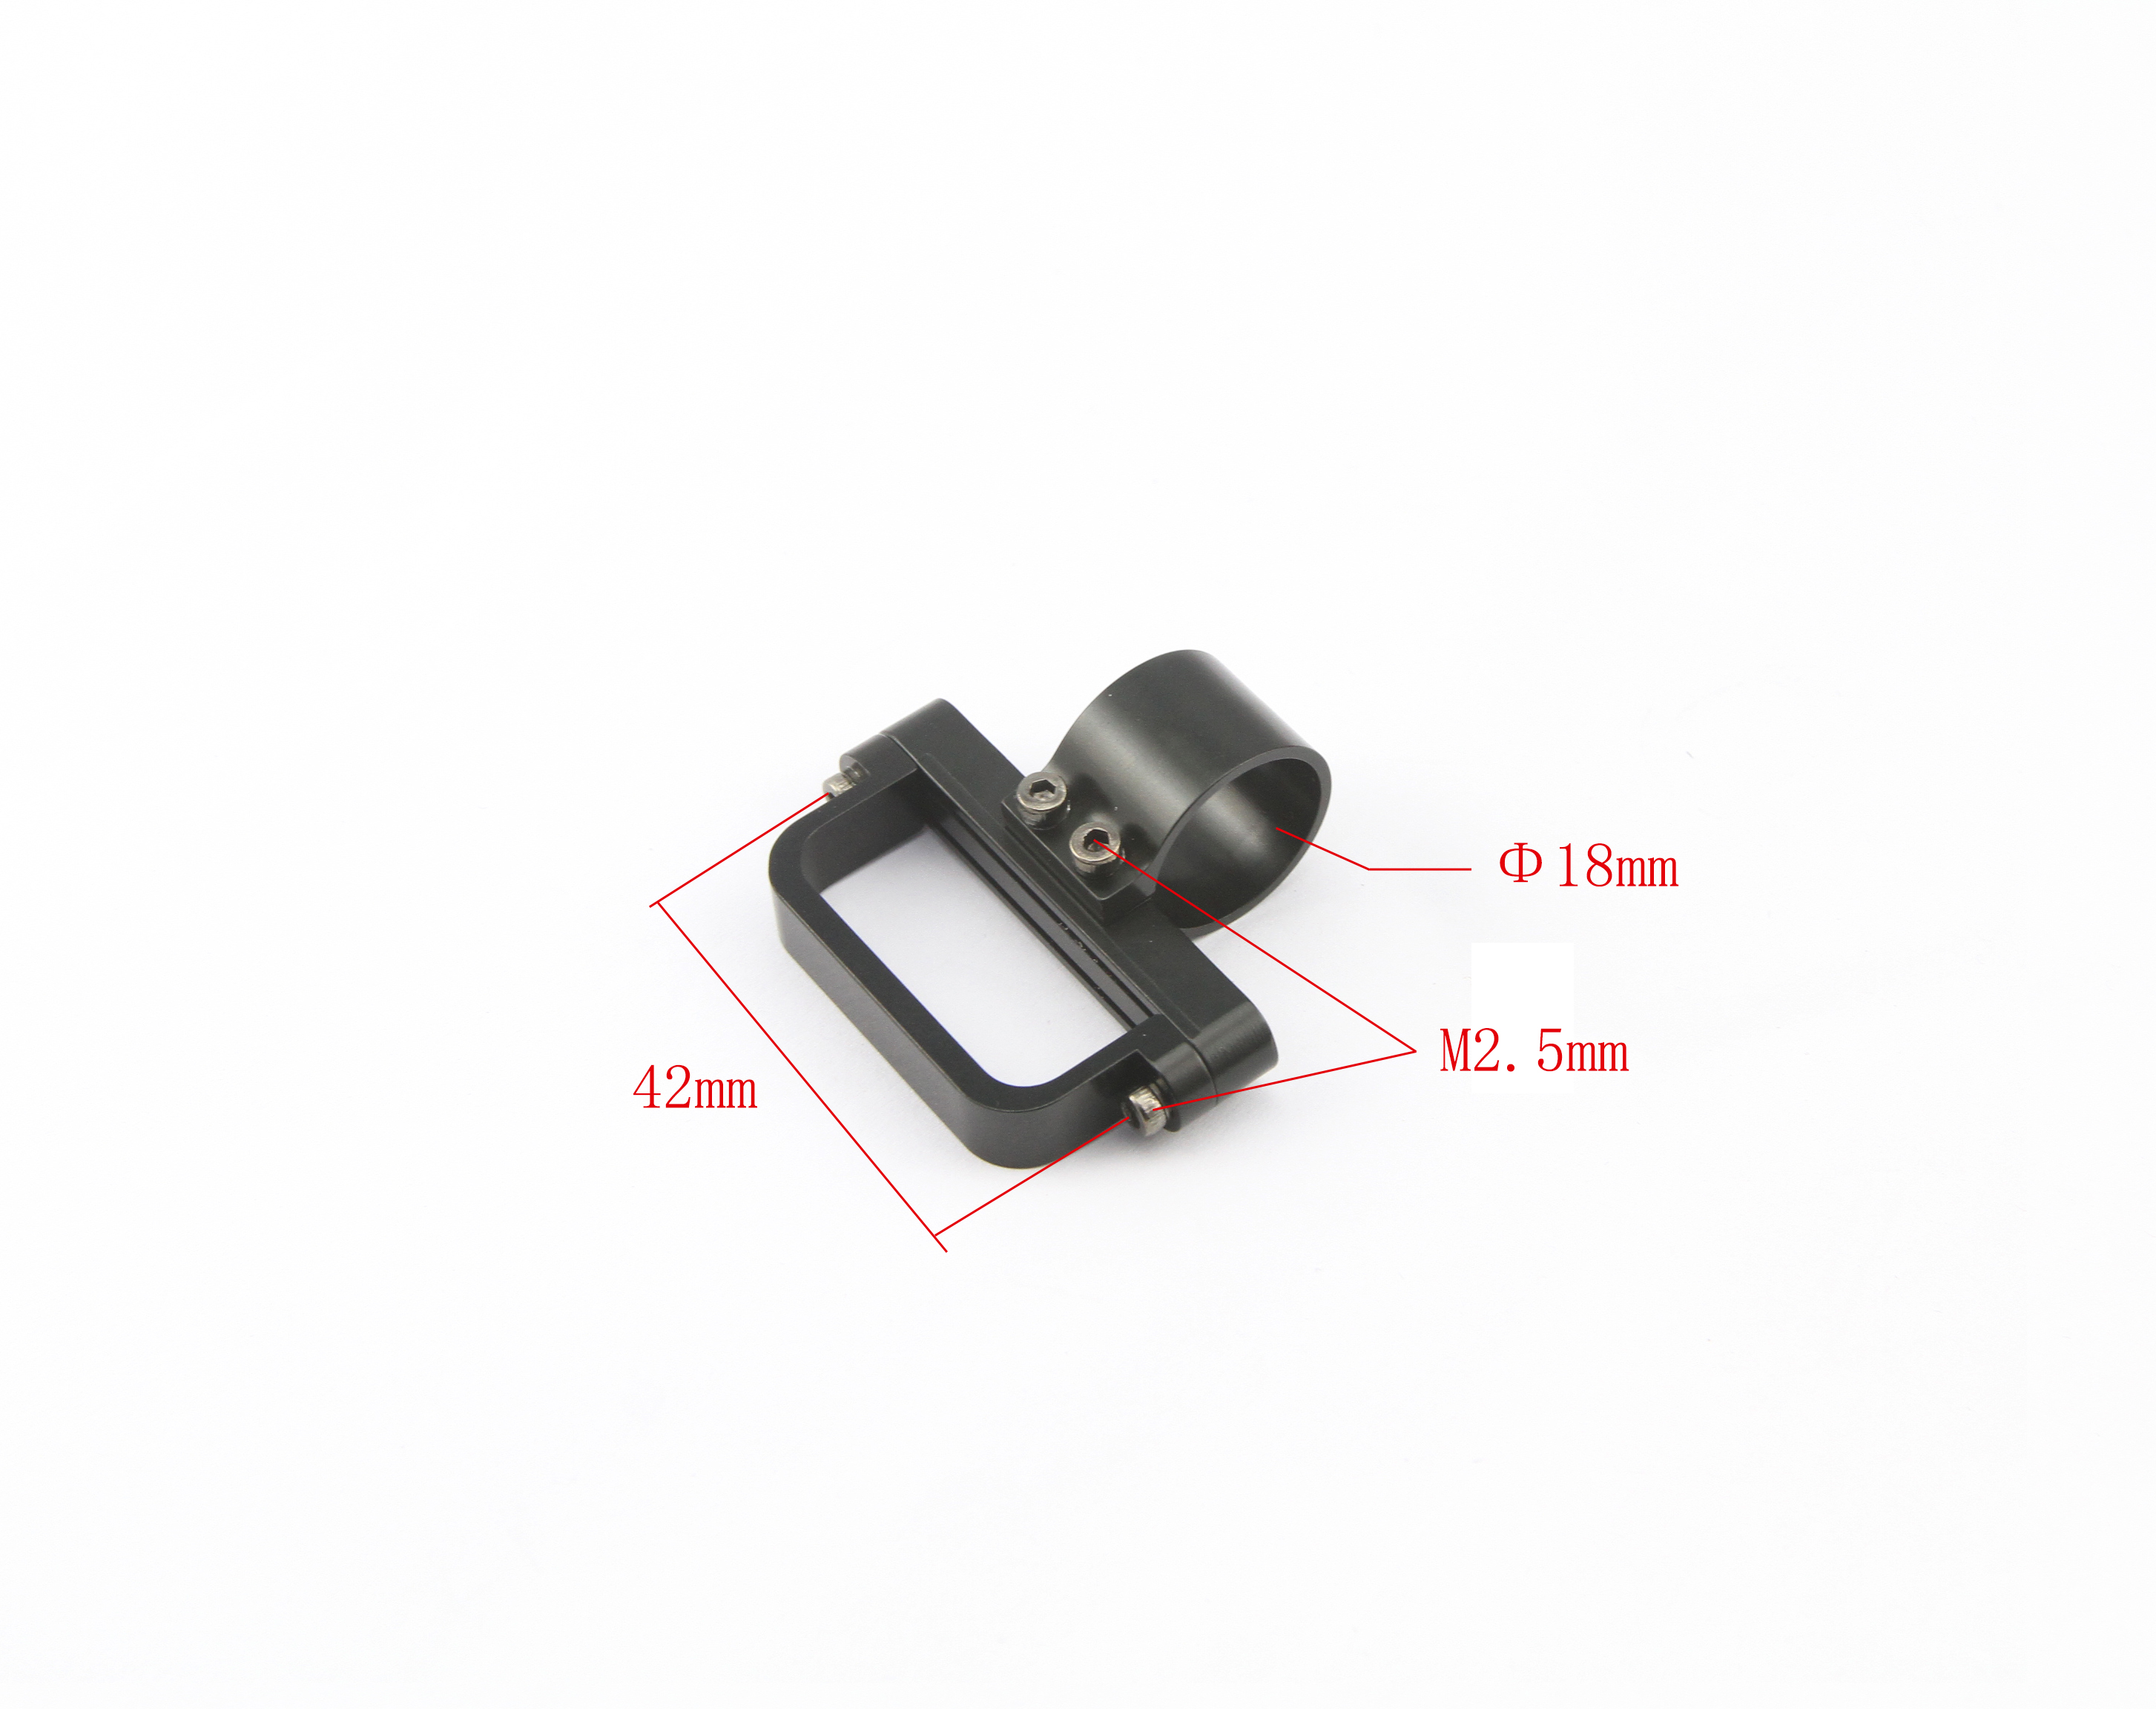 AS150U plug clamp measurements